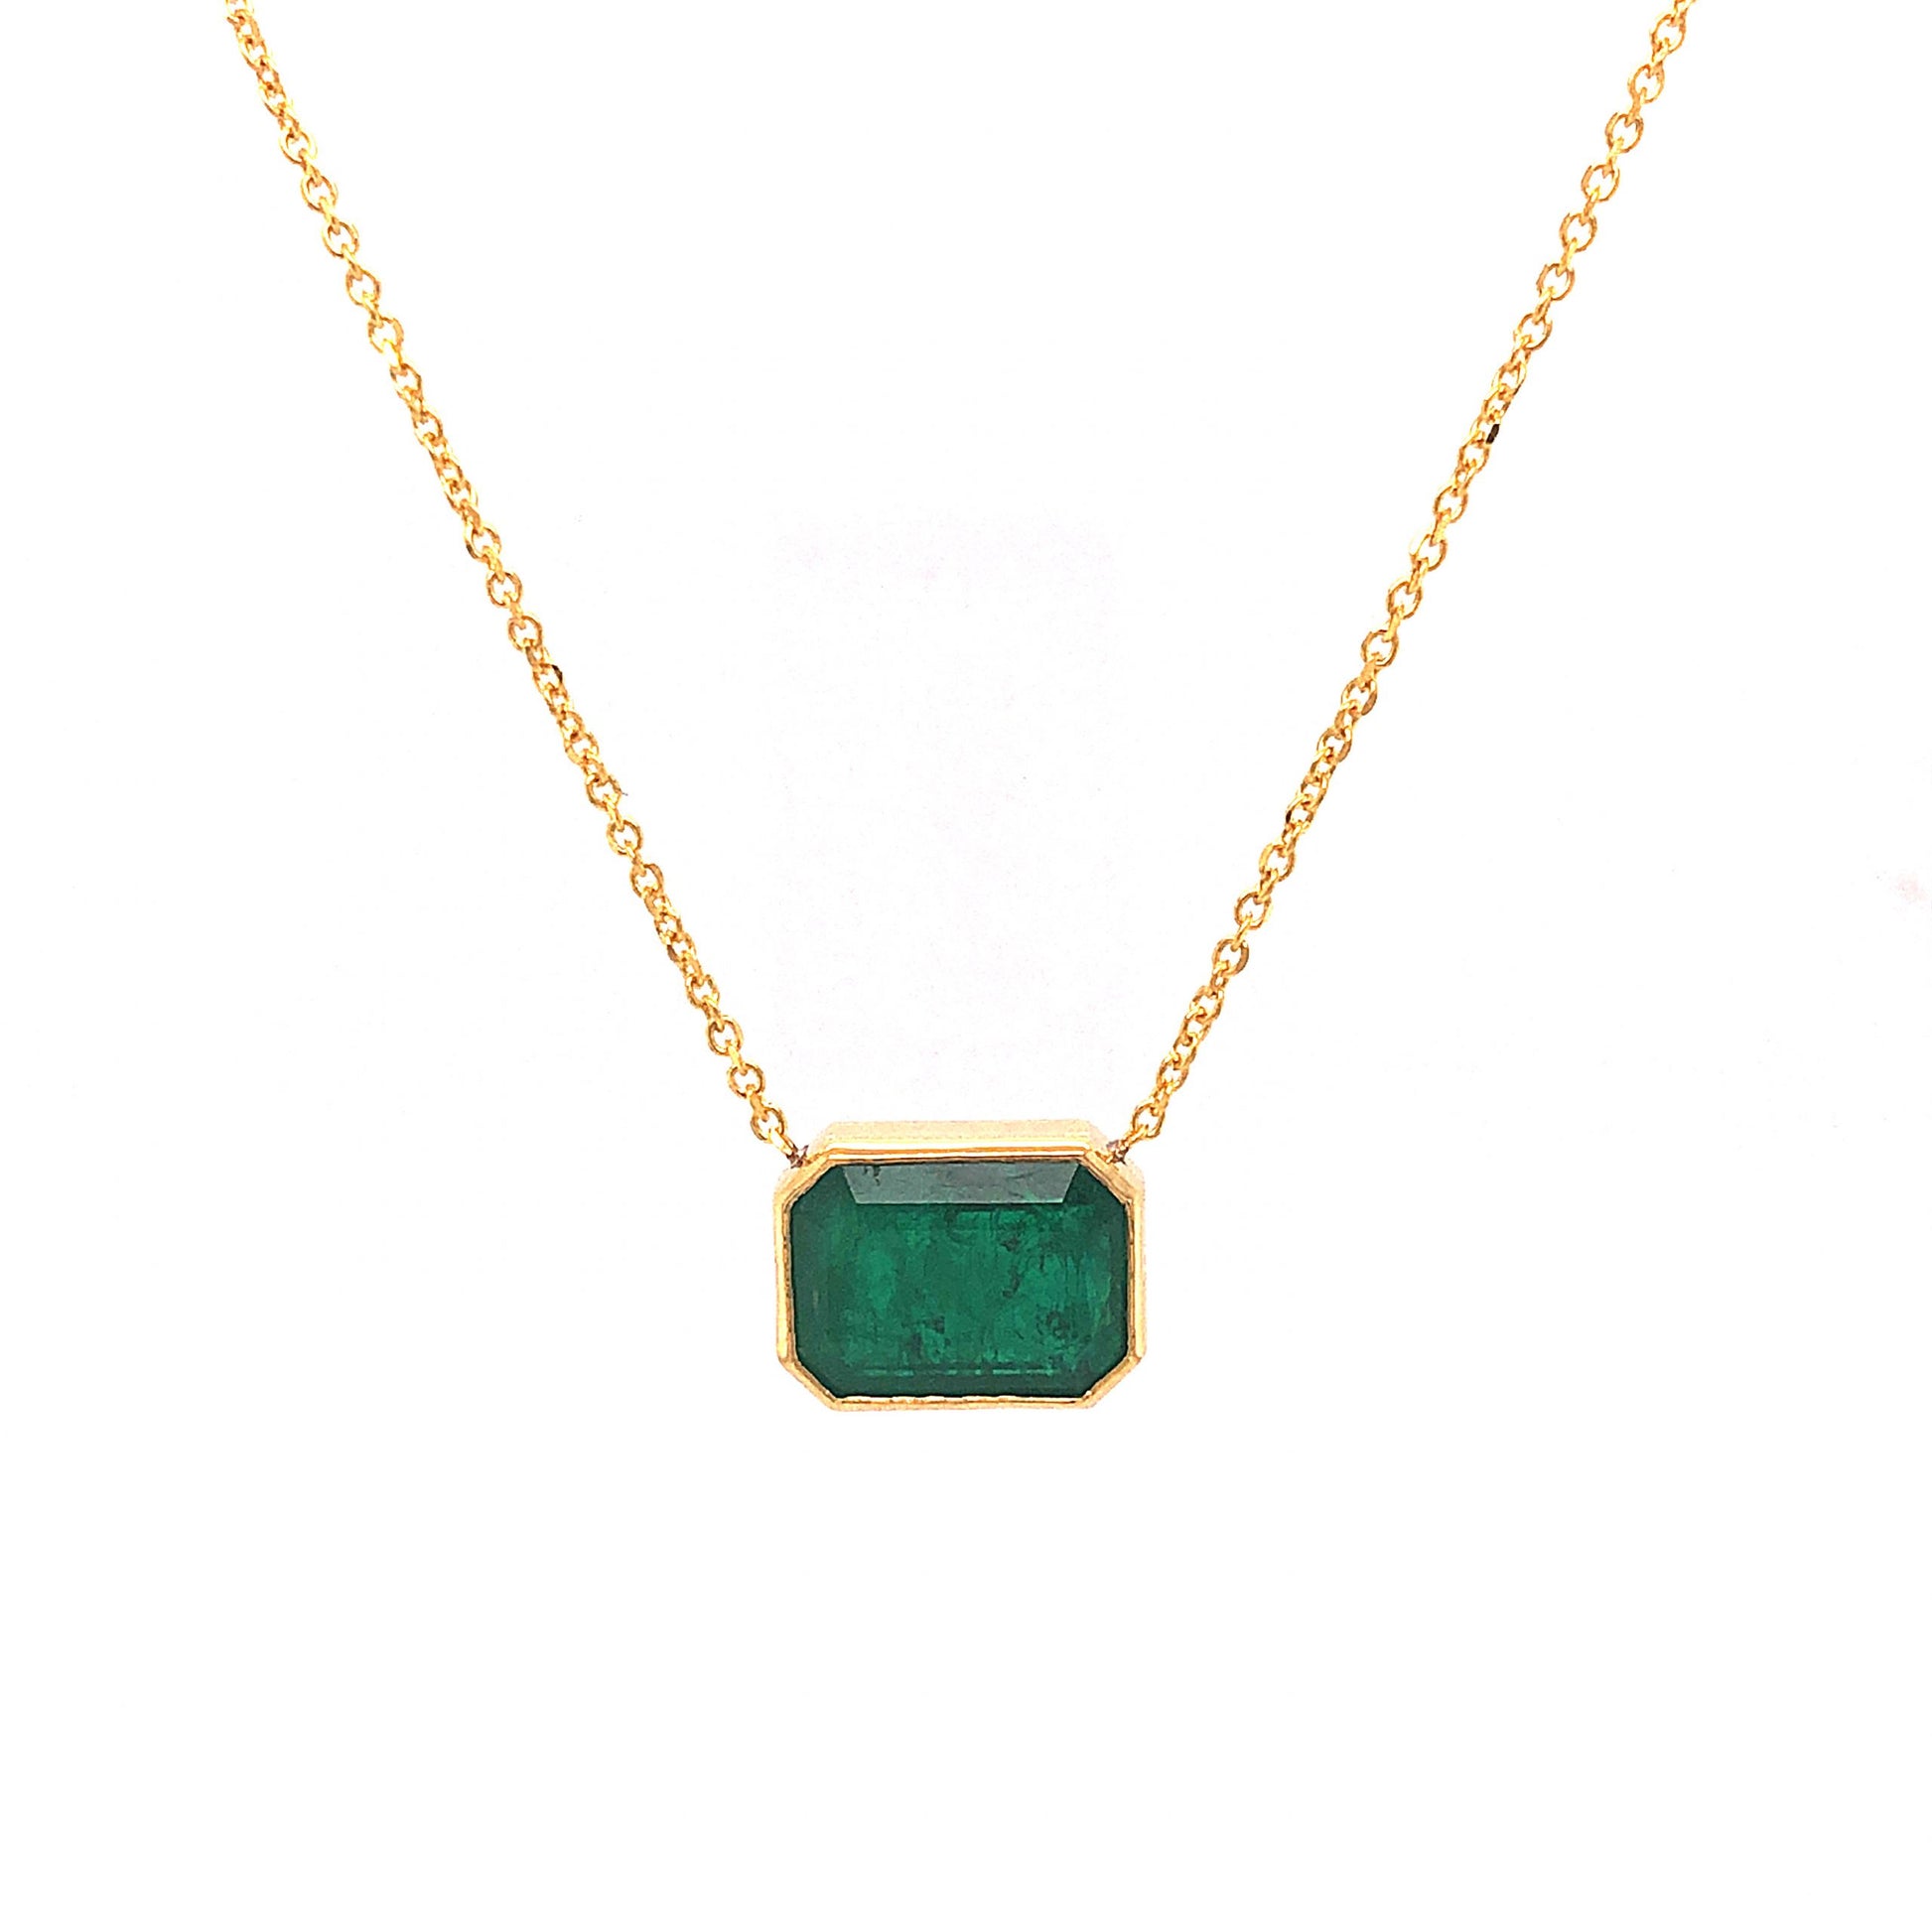 Bezel Set Emerald Pendant Necklace in 14k Yellow GoldComposition: 14 Karat Yellow GoldTotal Gram Weight: 2.75 gInscription: 14k 3.85 ct